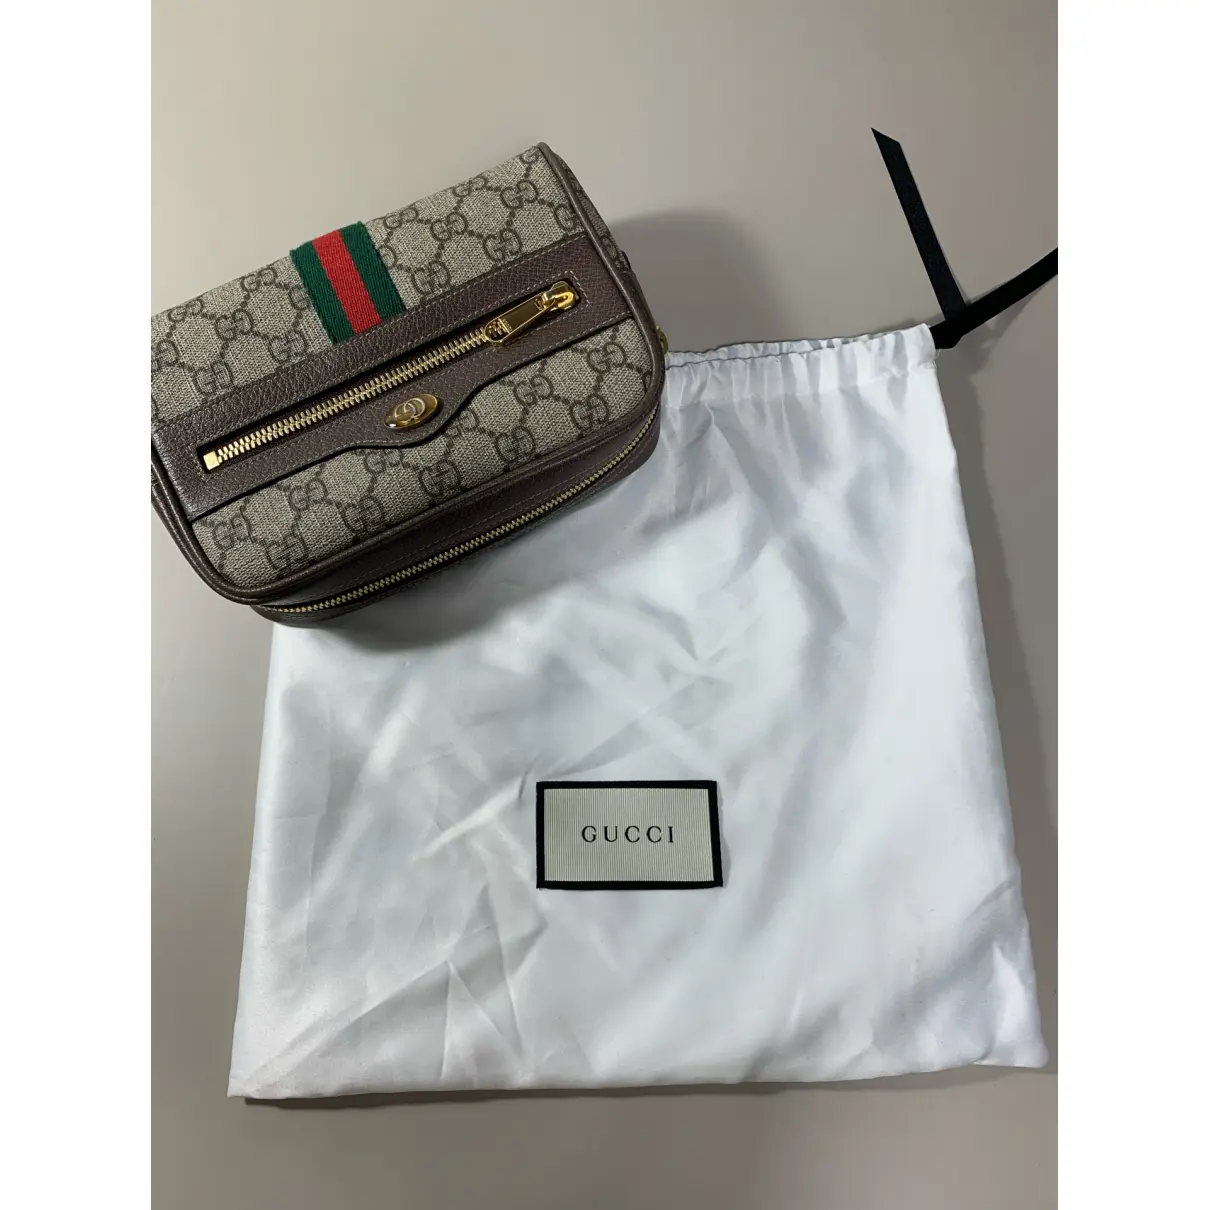 Buy Gucci Ophidia leather handbag online